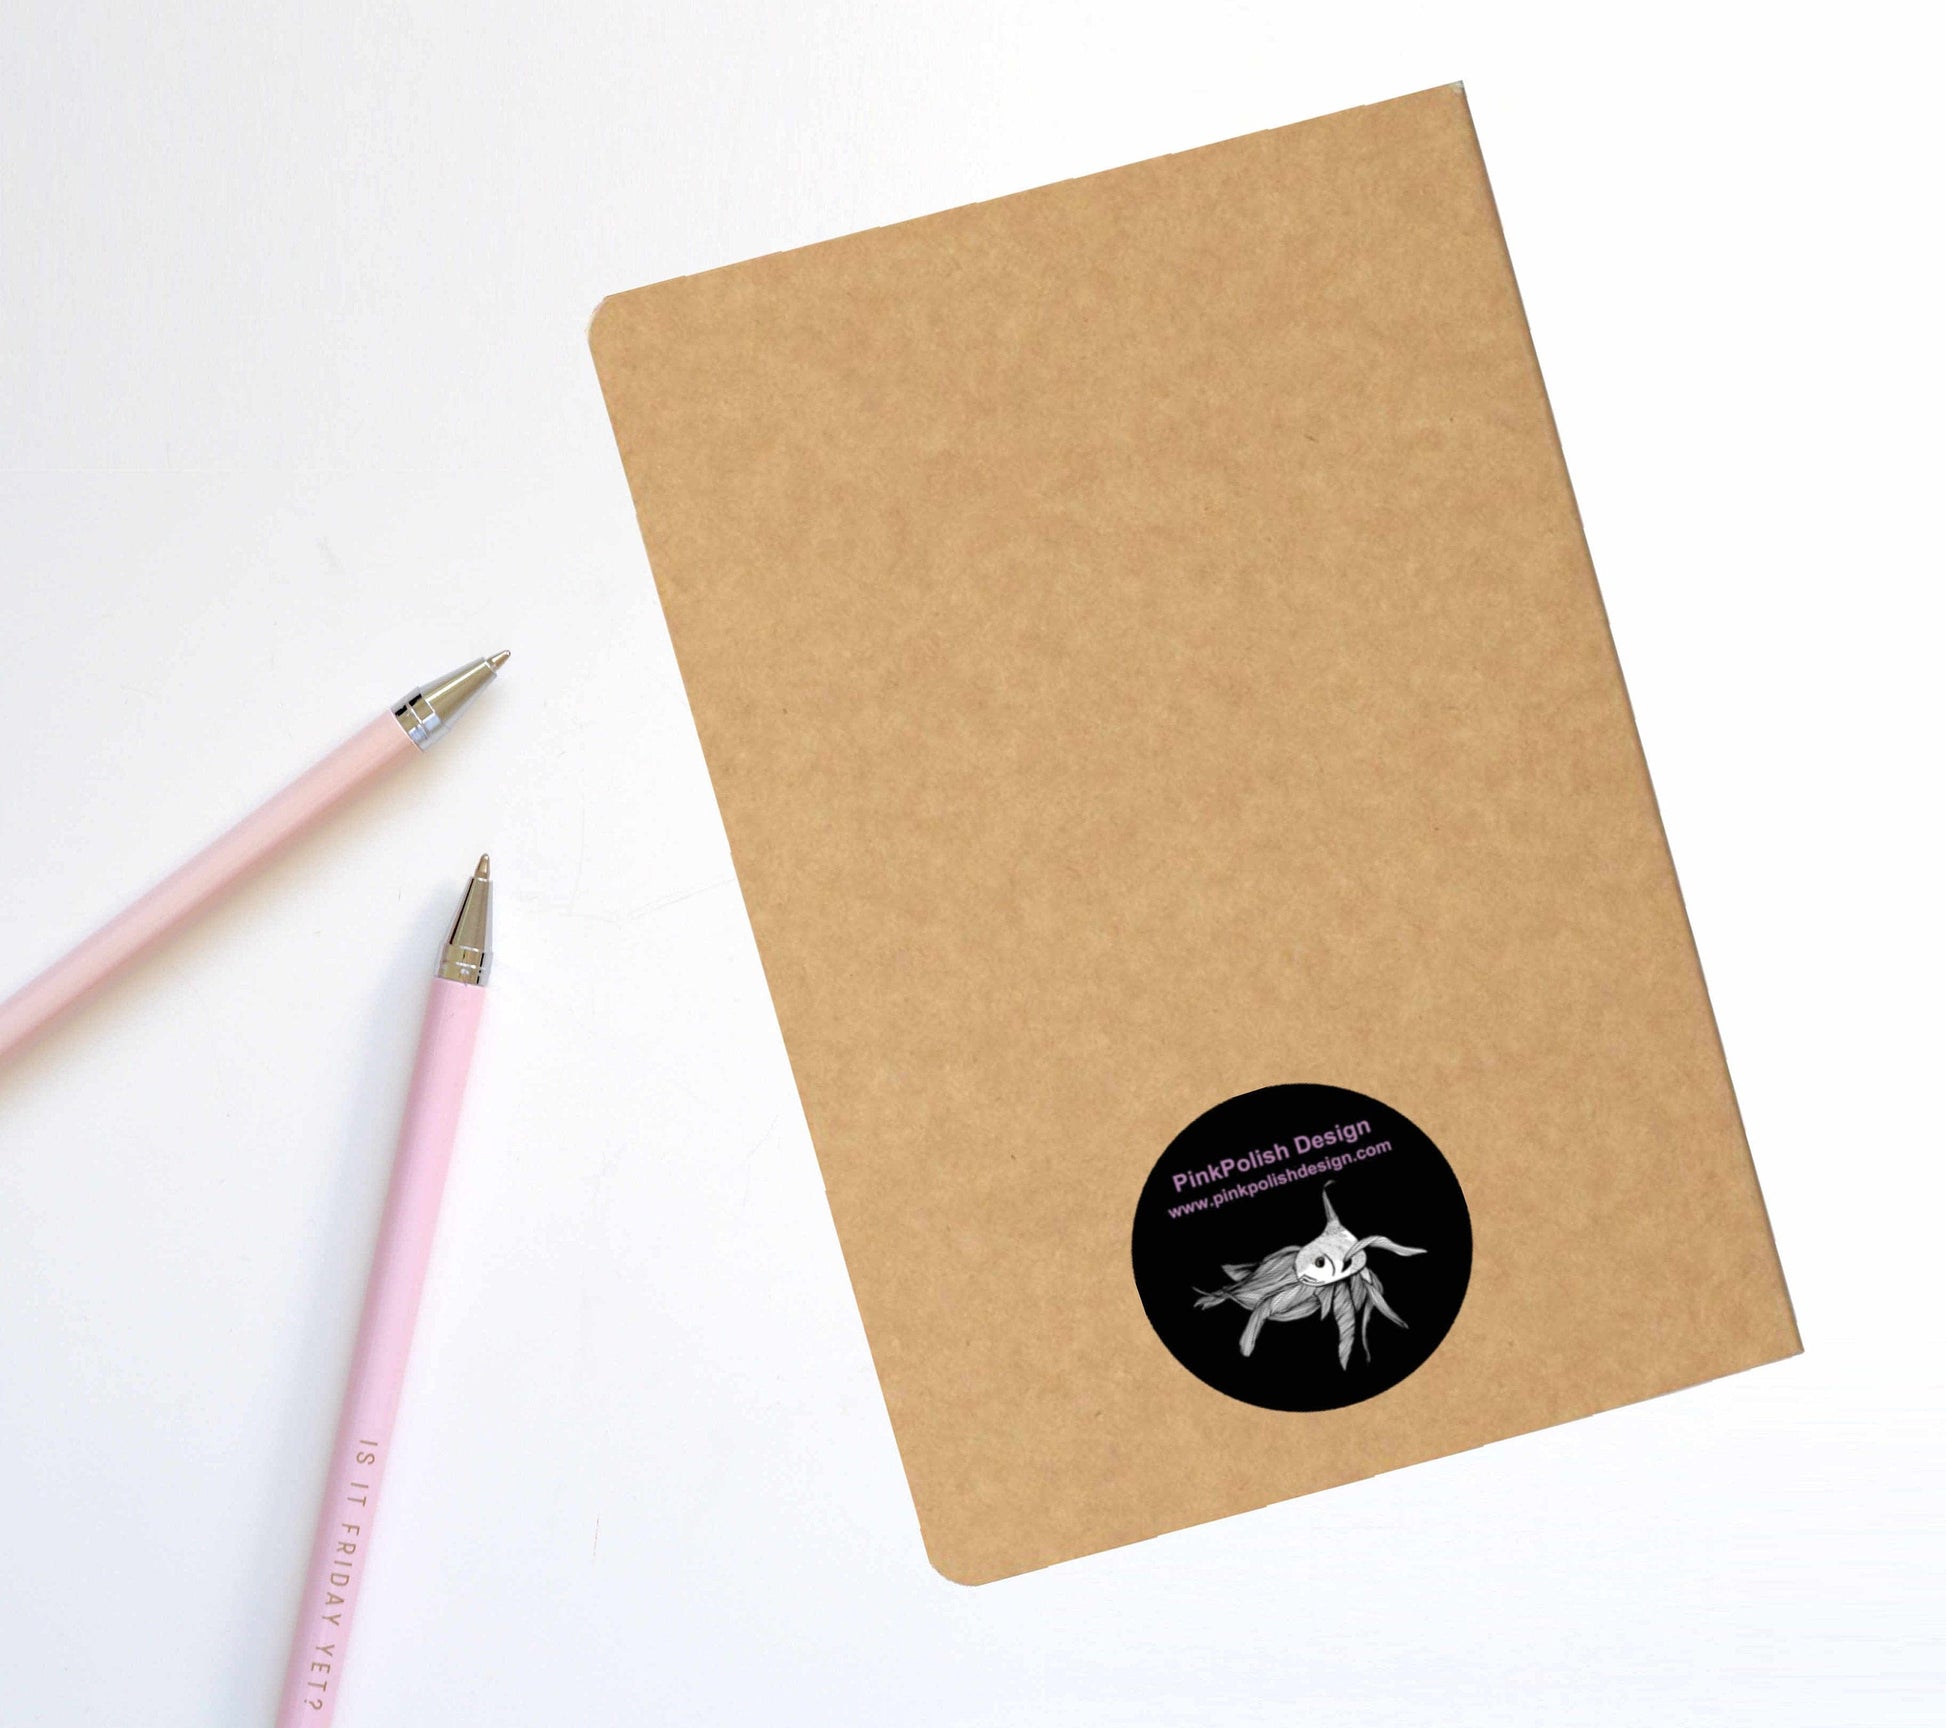 PinkPolish Design Notebook "Finding Direction" Compass Inspired Notebook / Sketchbook / Journal